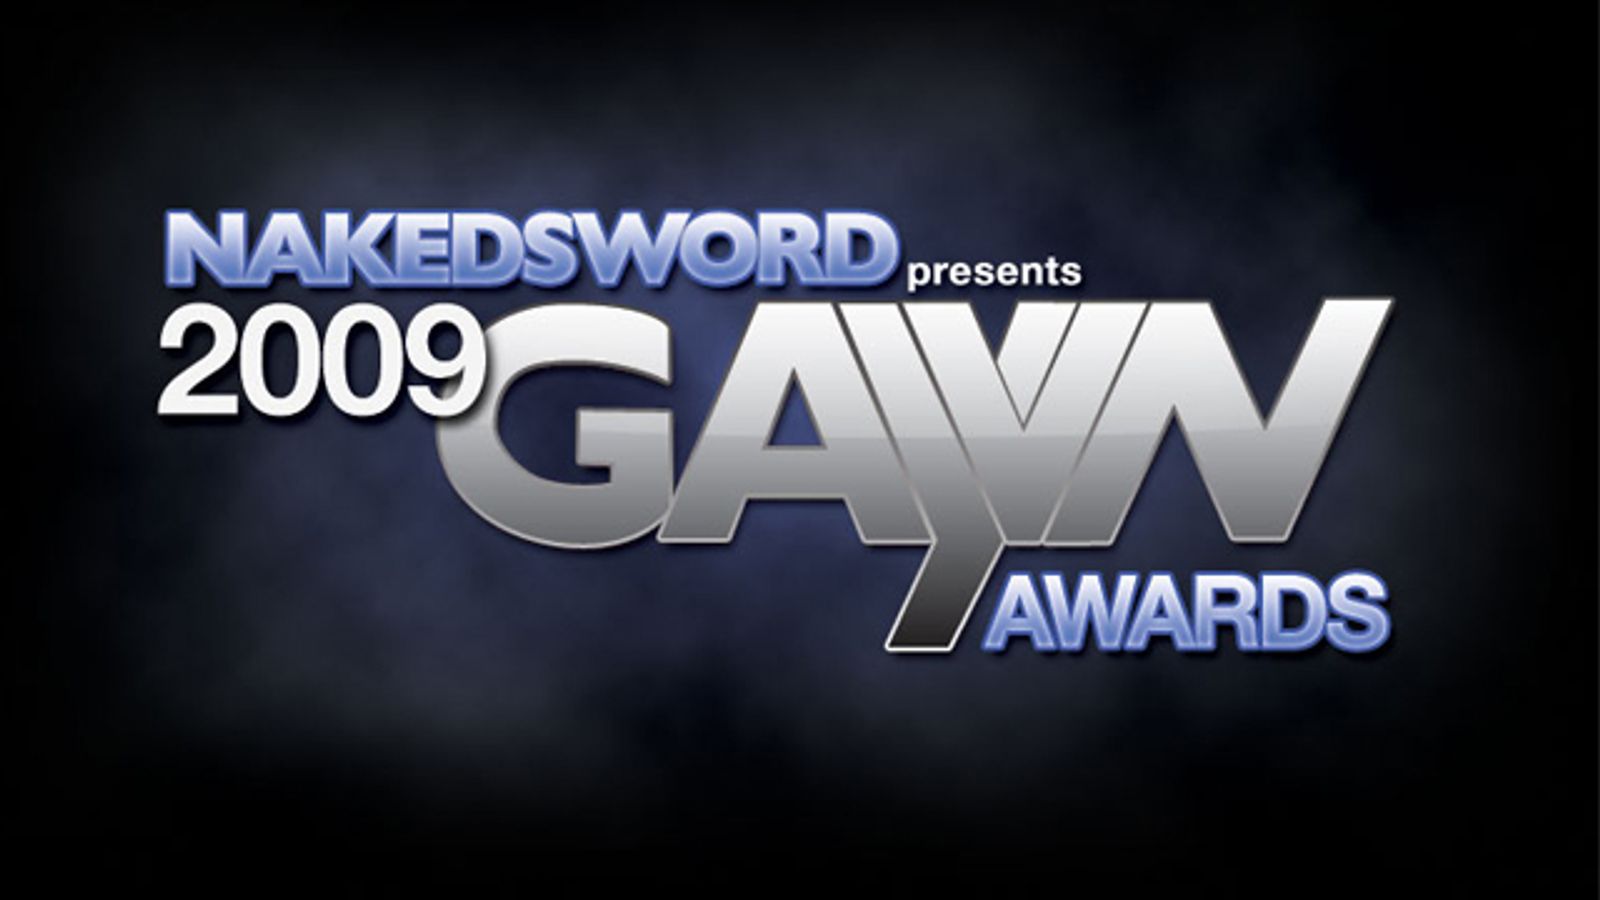 2009 GAYVN Award Nominees Announced